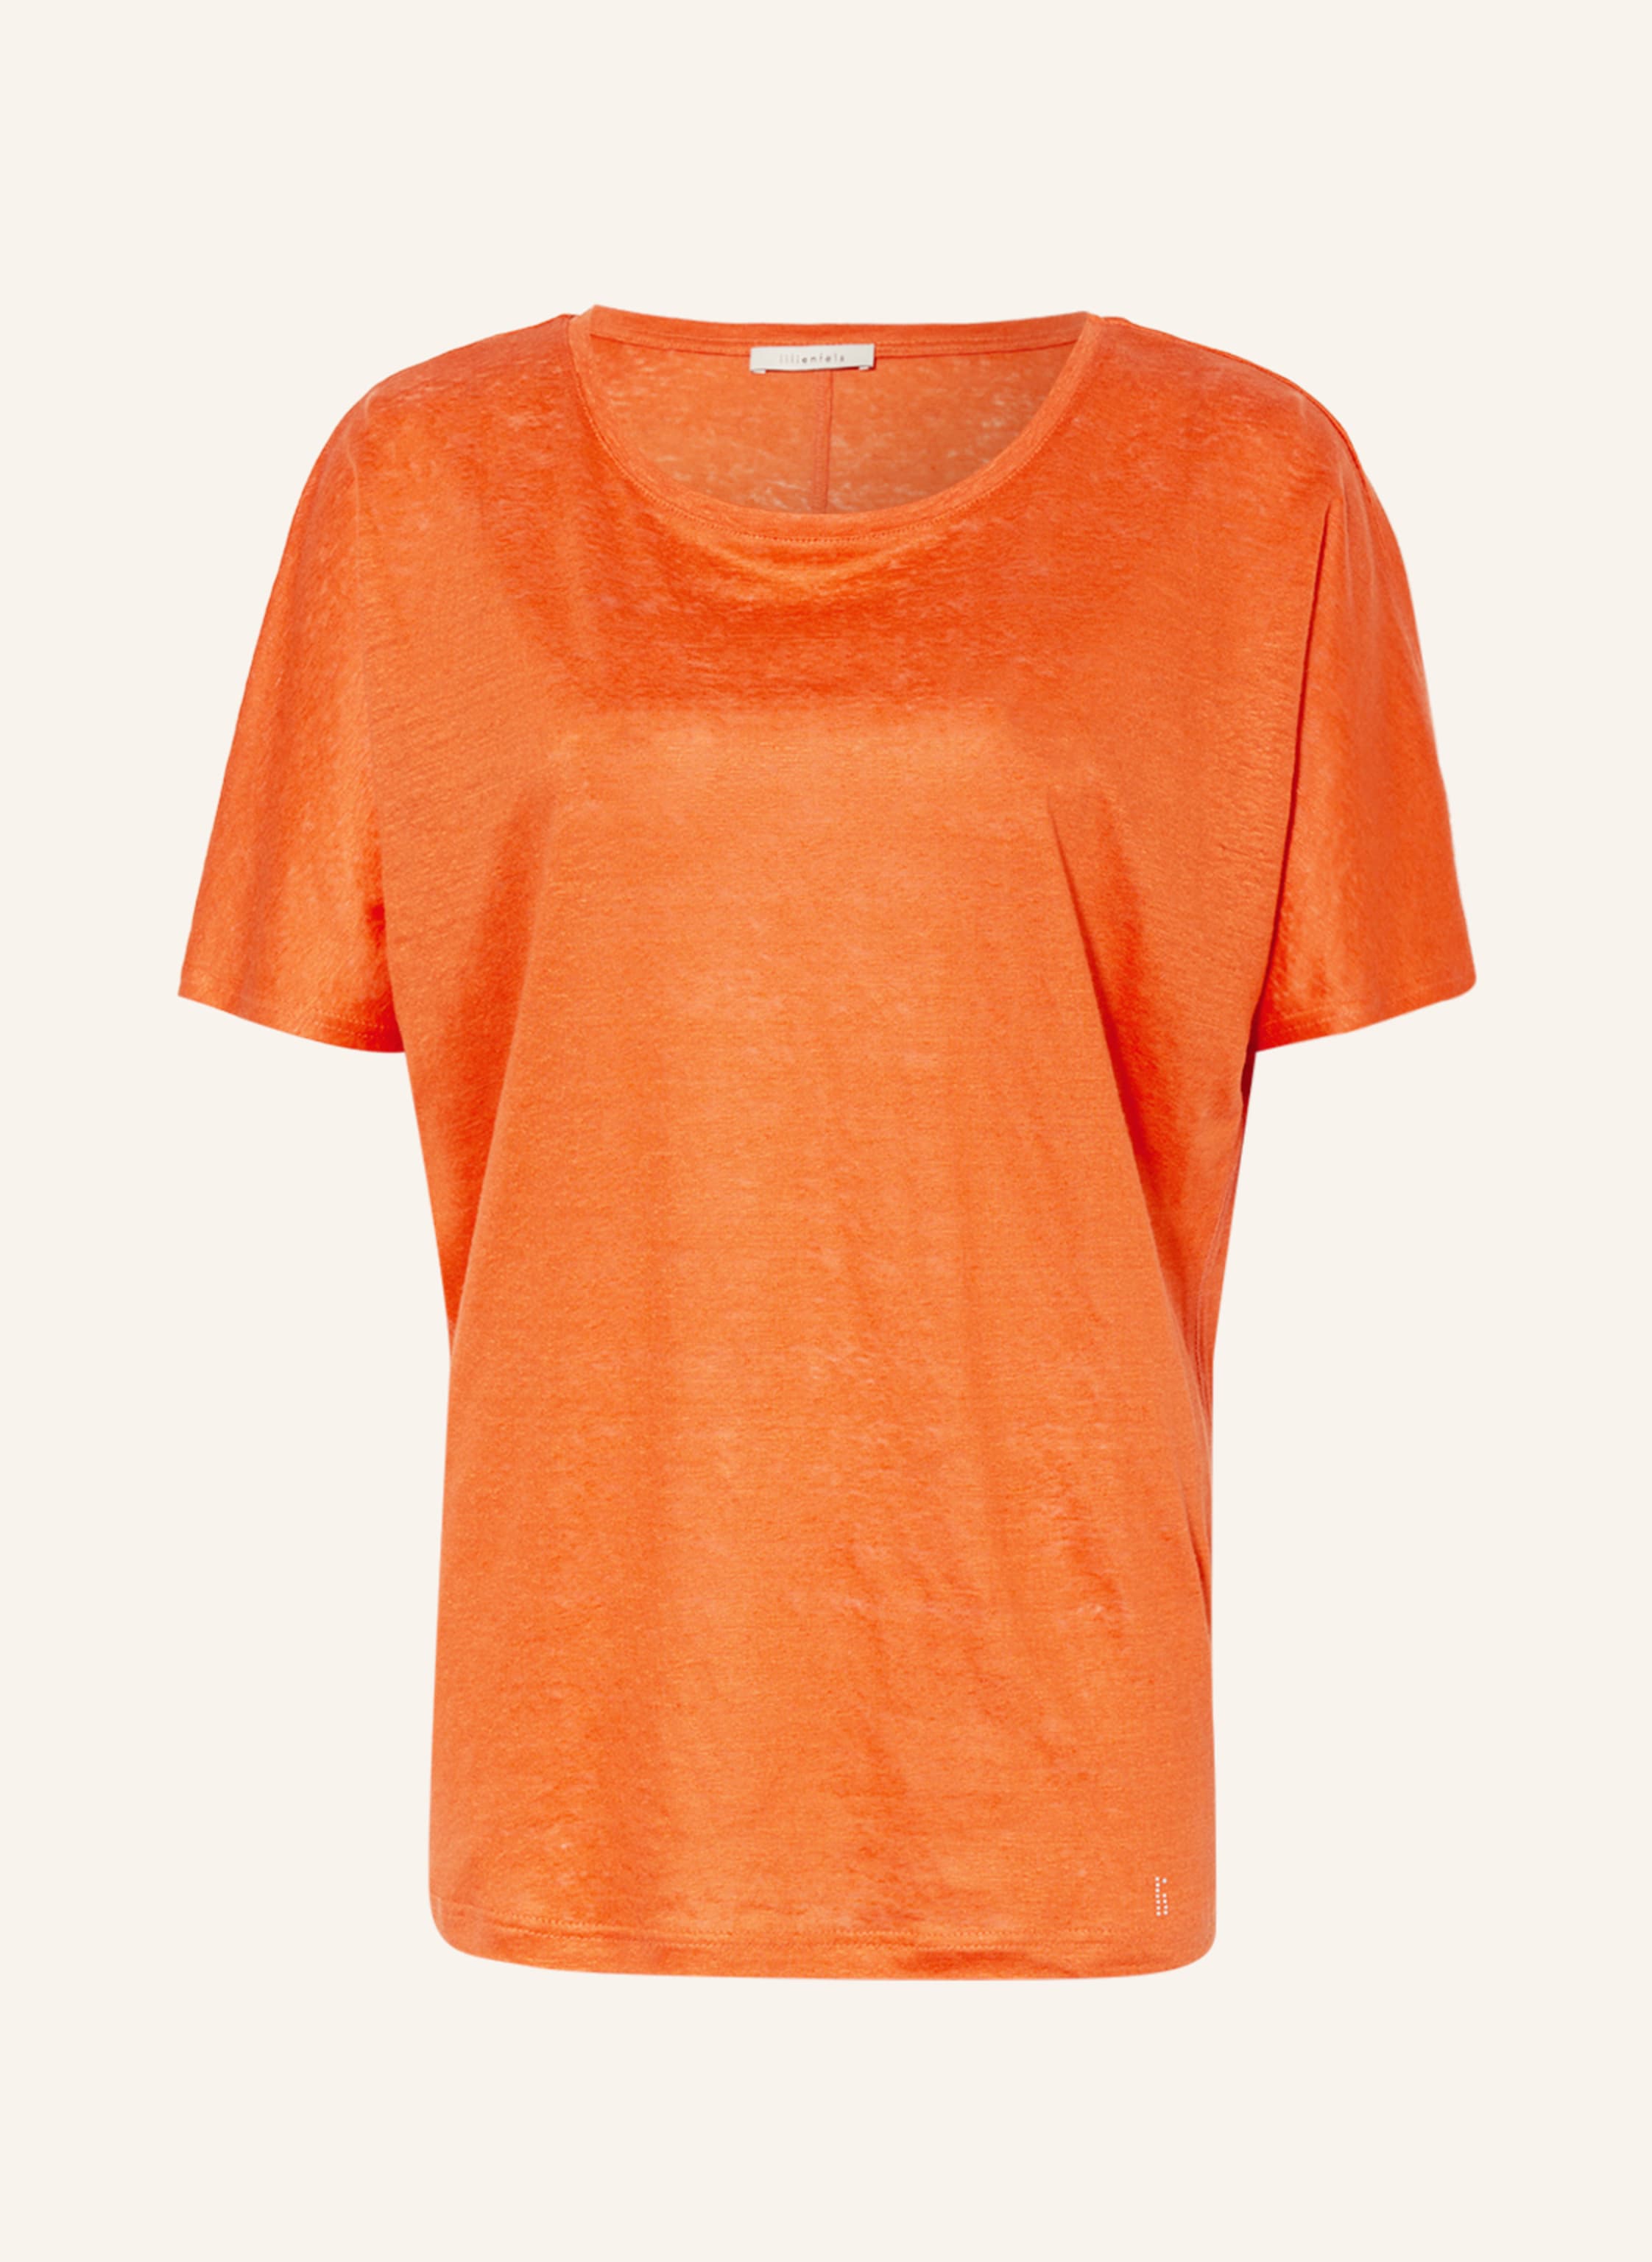 lilienfels T-shirt made of linen in orange